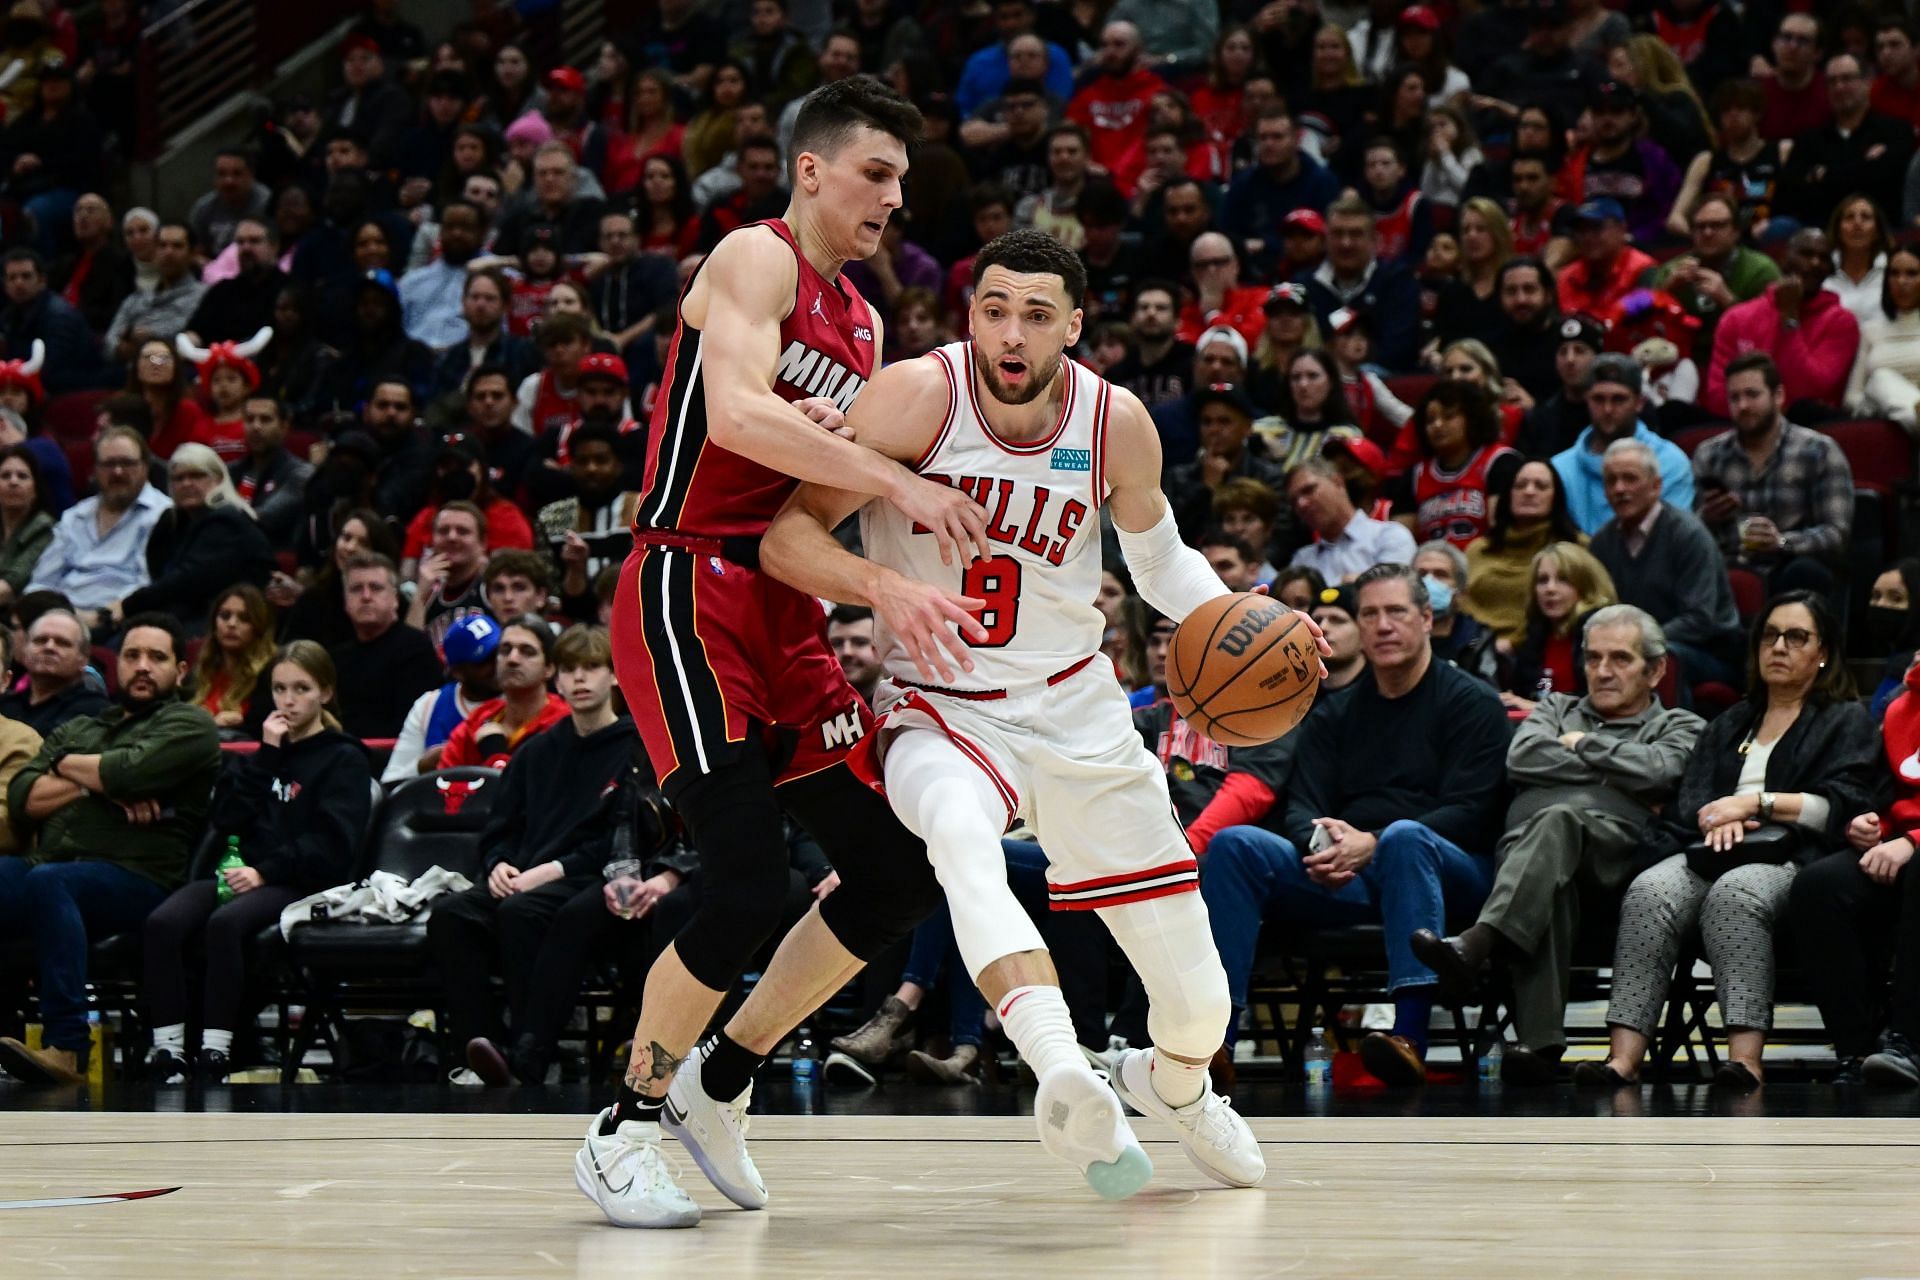 Miami Heat vs. Chicago Bulls: Zach LaVine drives the ball